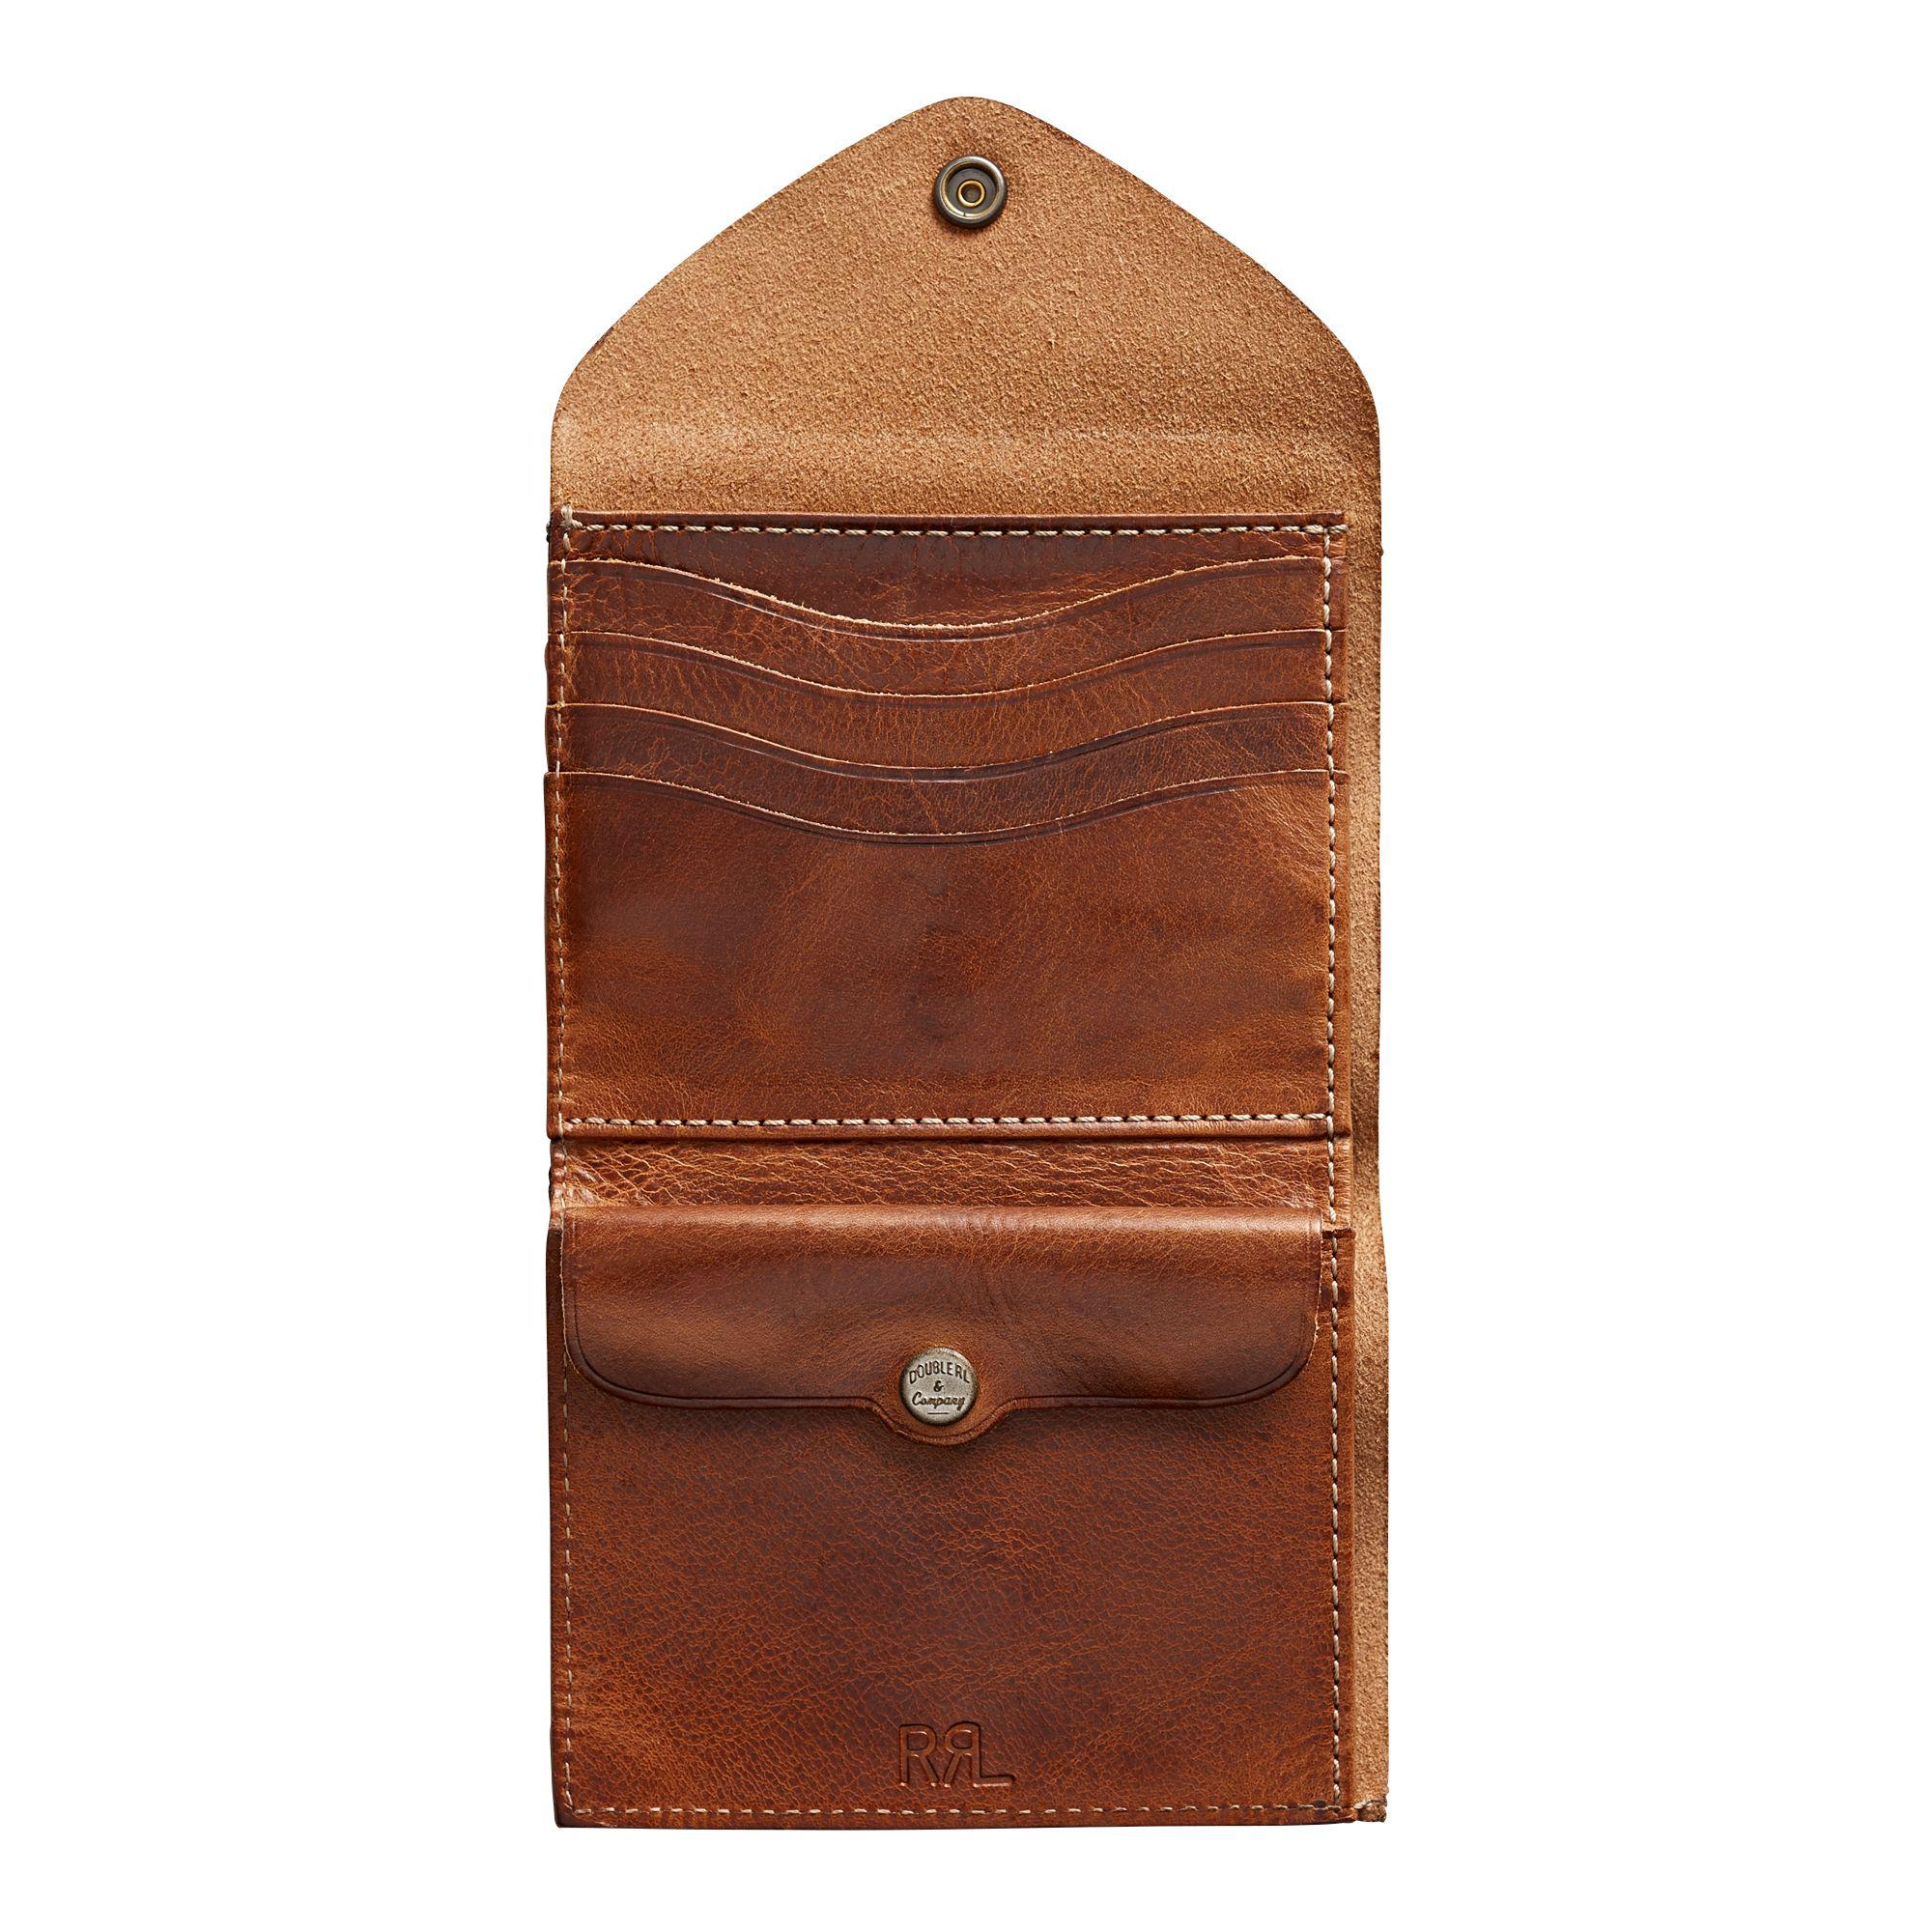 RRL Concho Leather Envelope Wallet in Brown for Men - Lyst